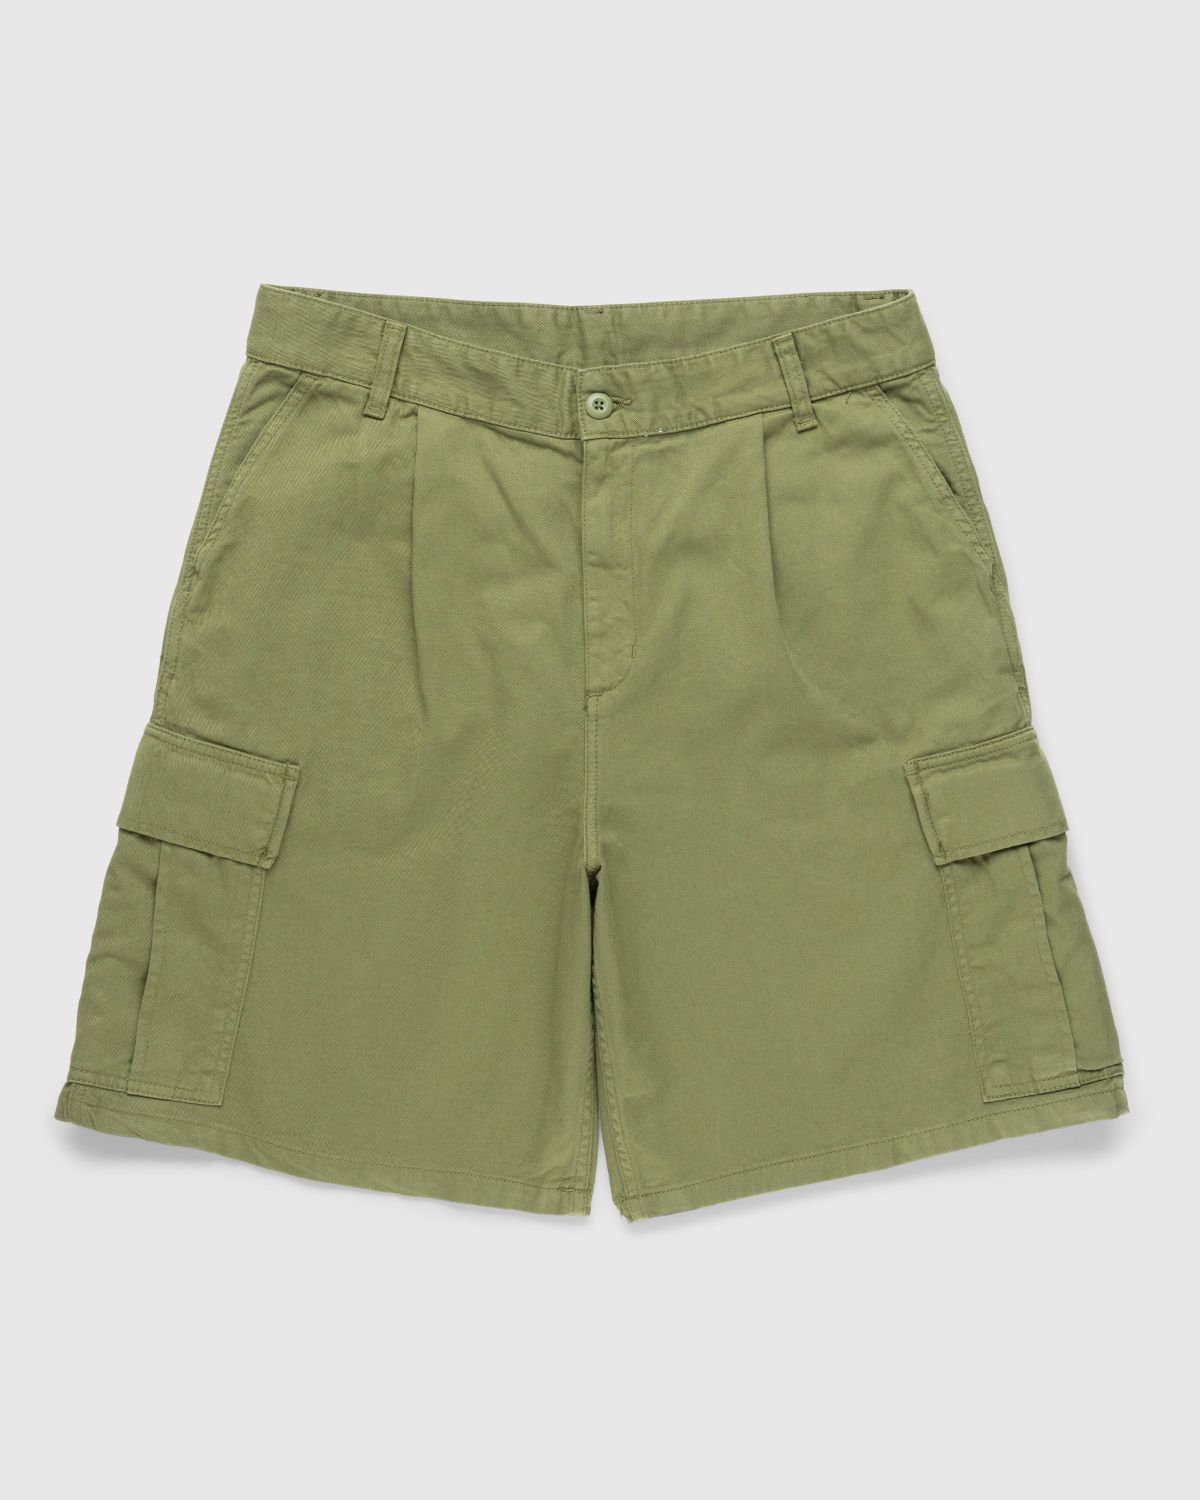 Carhartt WIP – Cole Cargo Short Green - Cargo Shorts - Green - Image 1